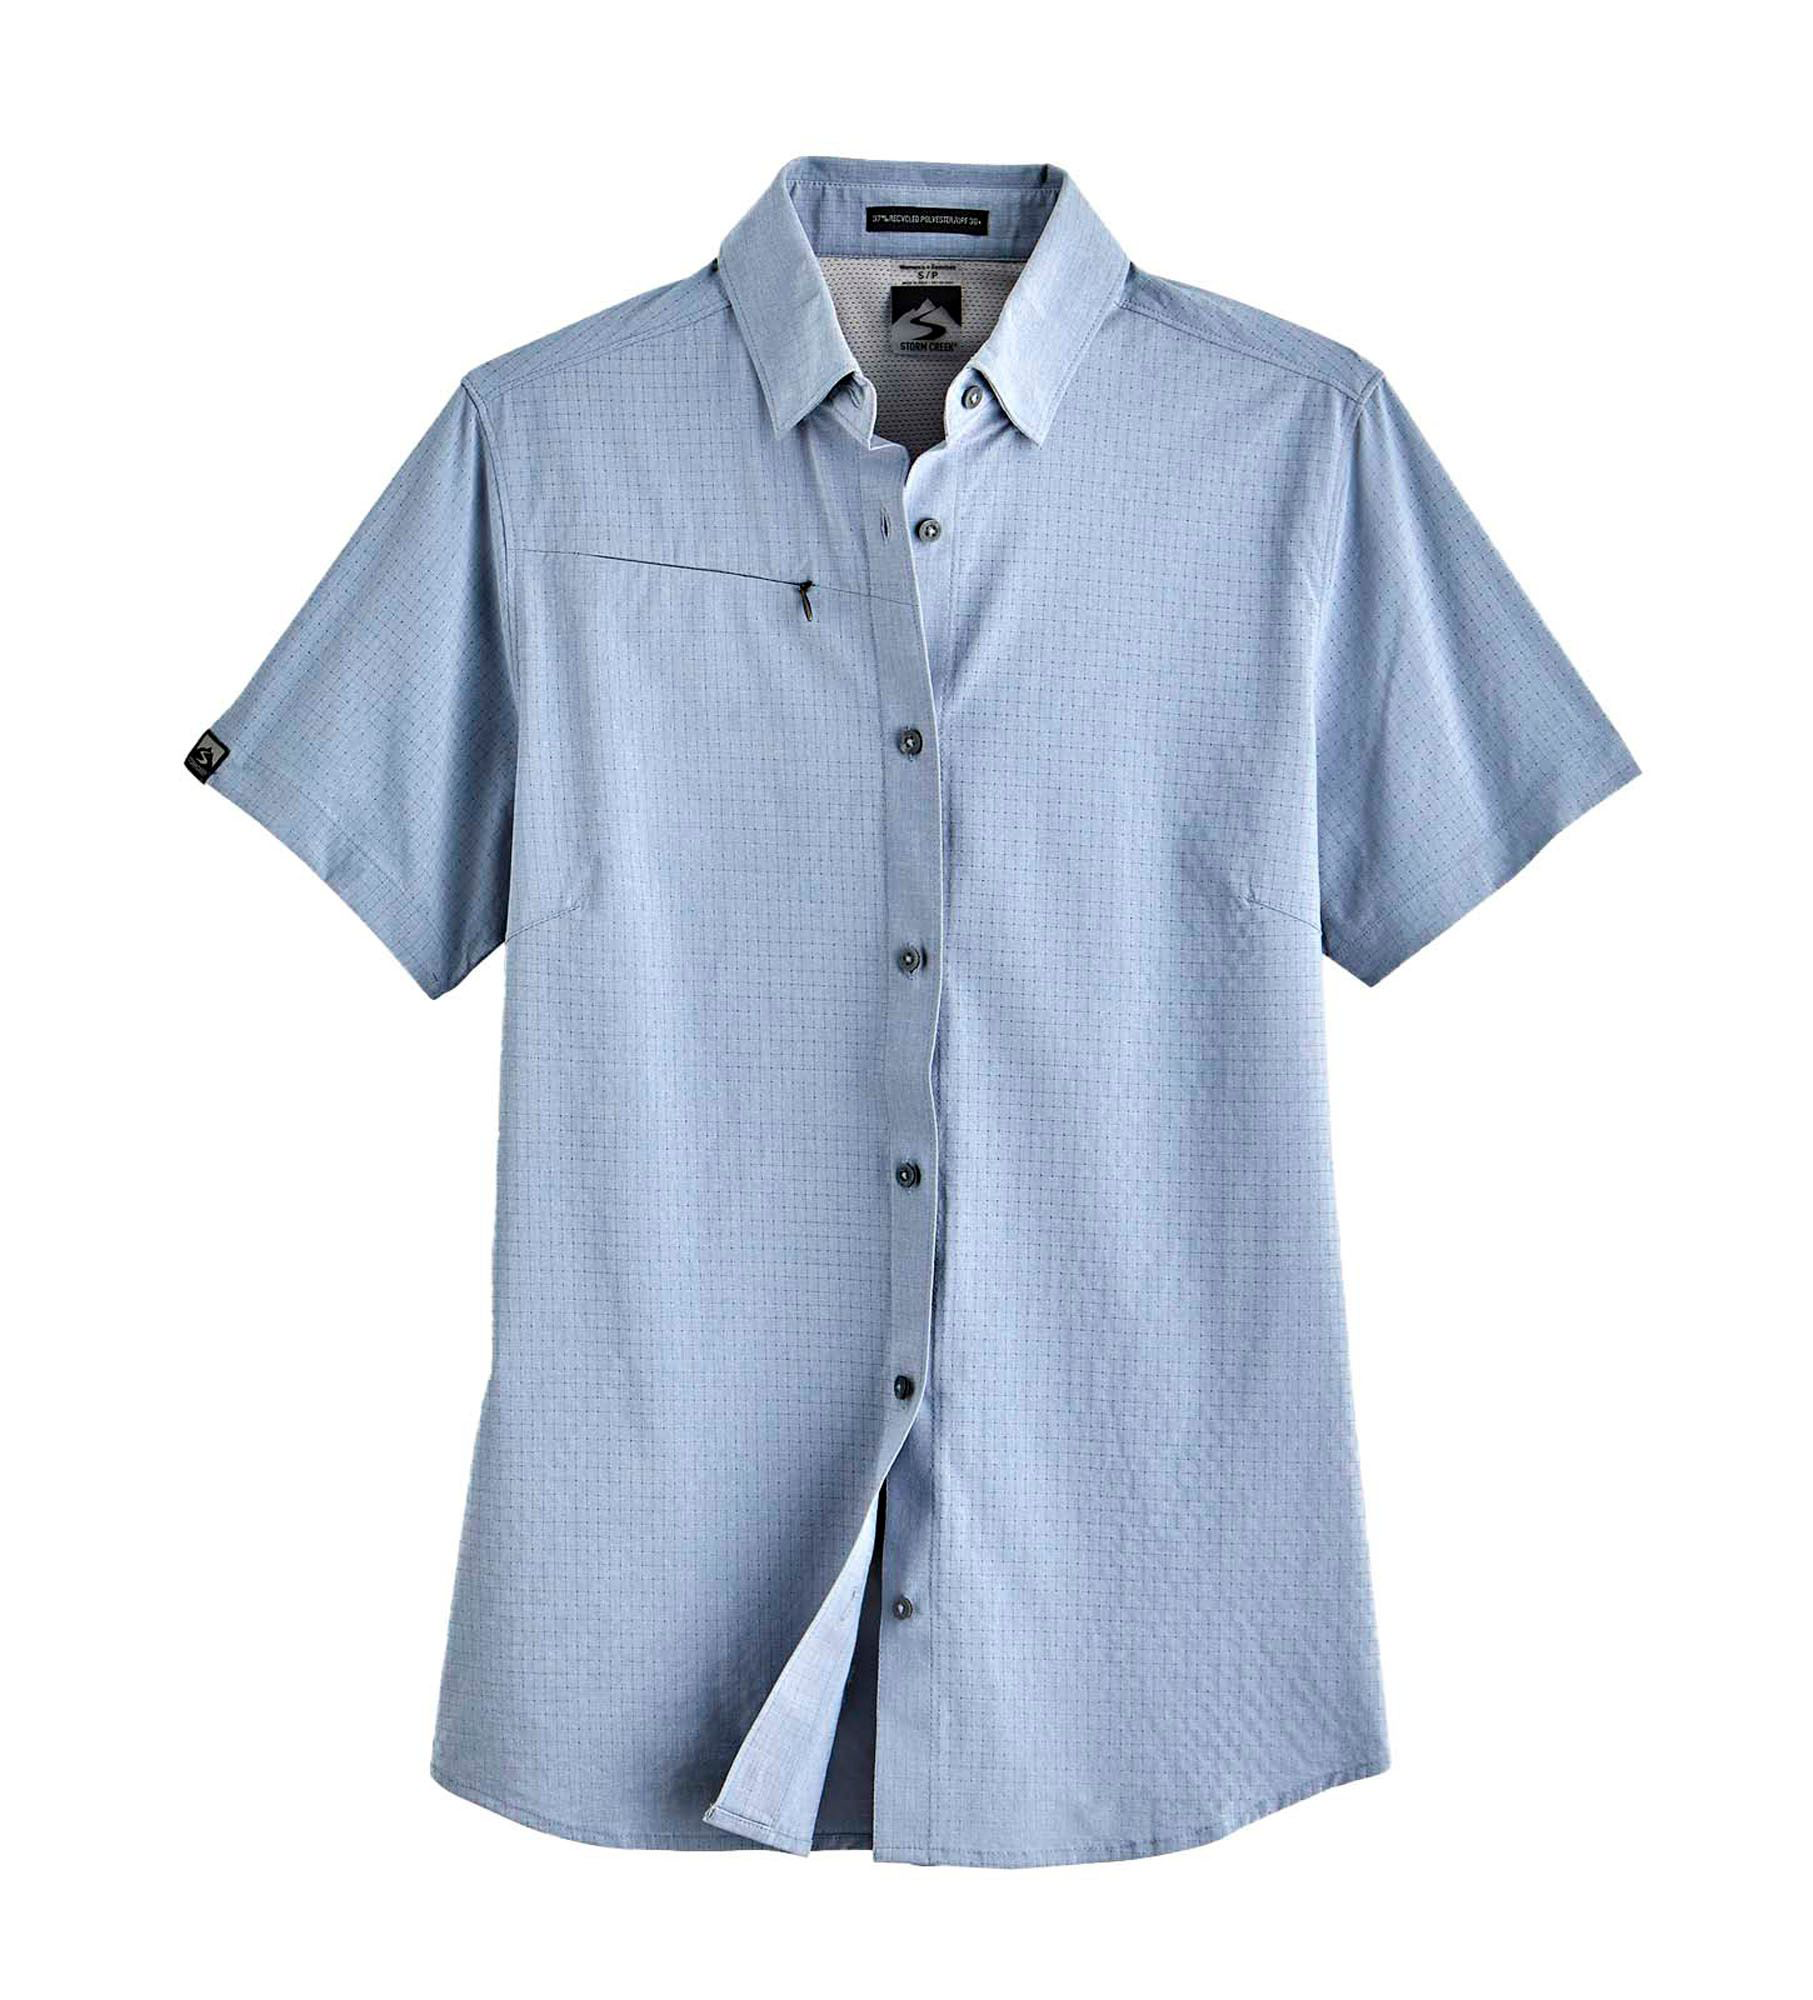 Storm Creek Naturalist Short-Sleeve Shirt for Ladies - Blue Mist - S